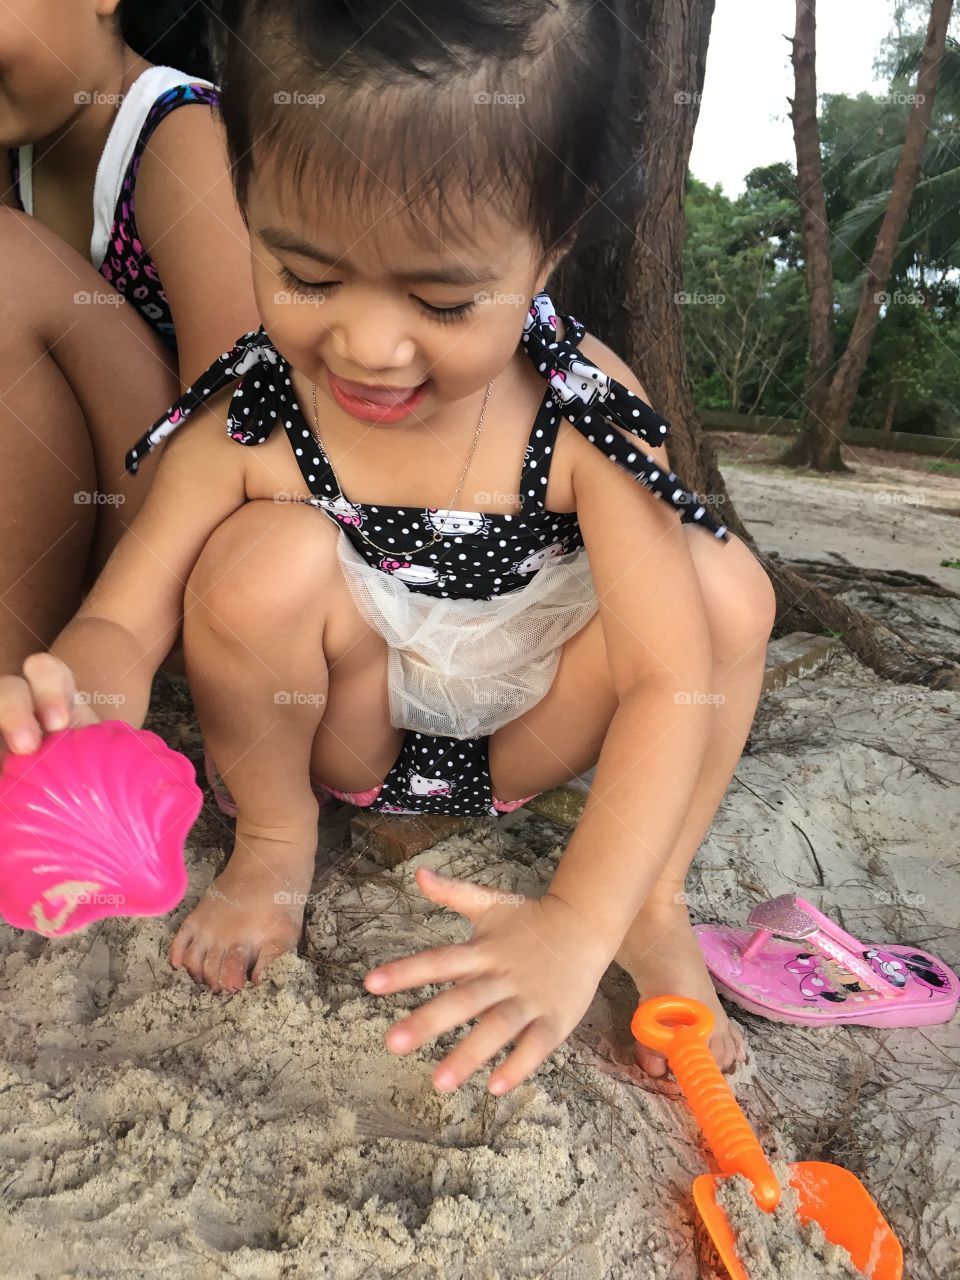 Girl playing sand so funny